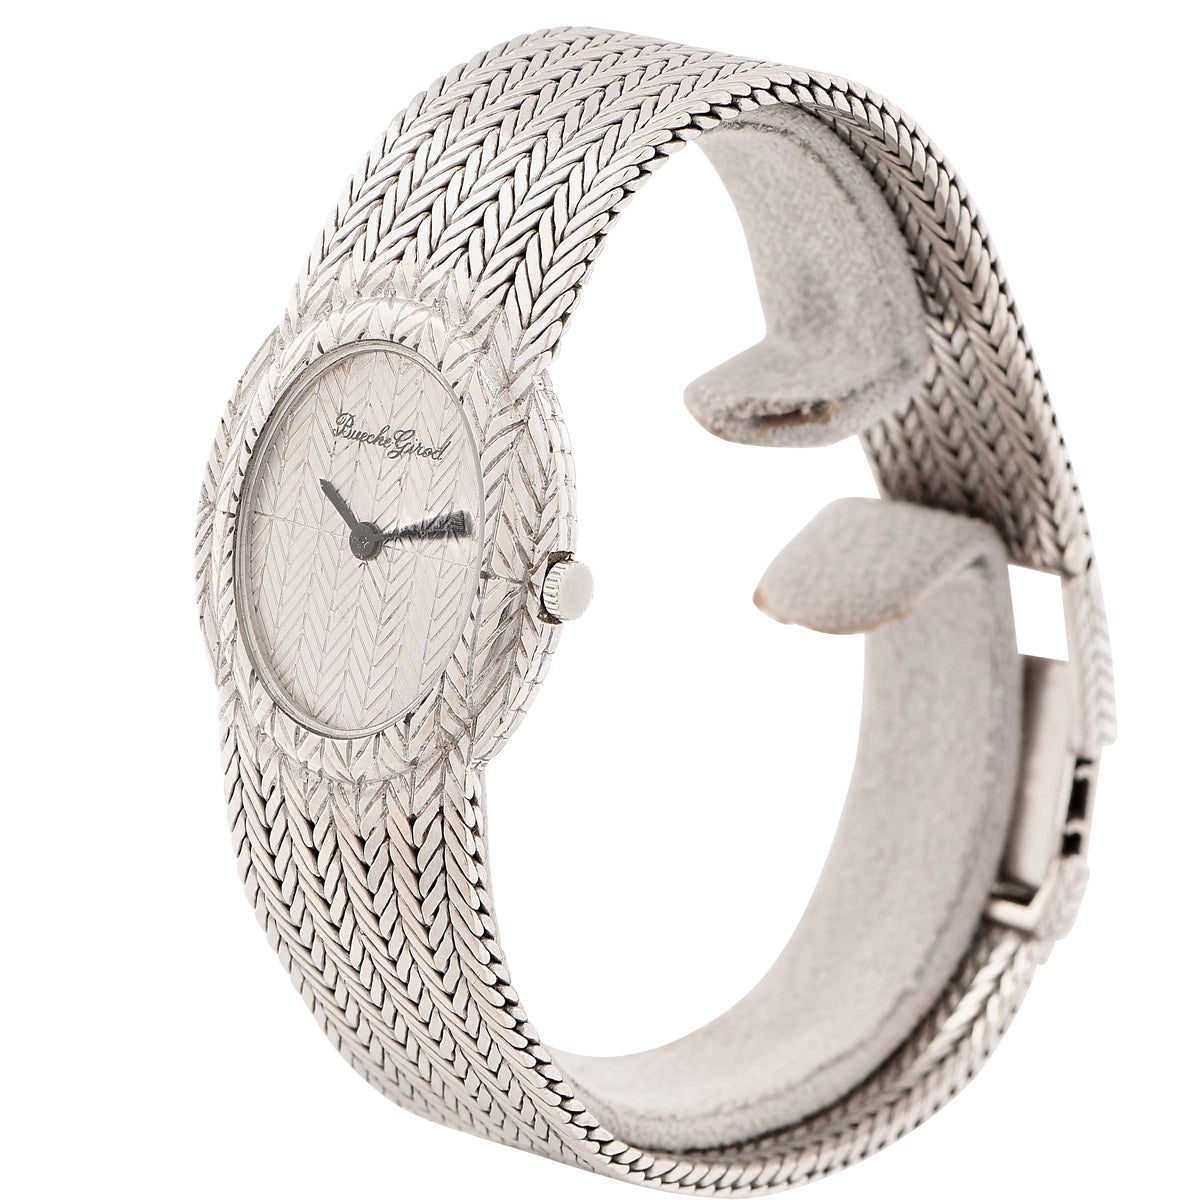 Bueche Girod Ladies White Gold Wristwatch